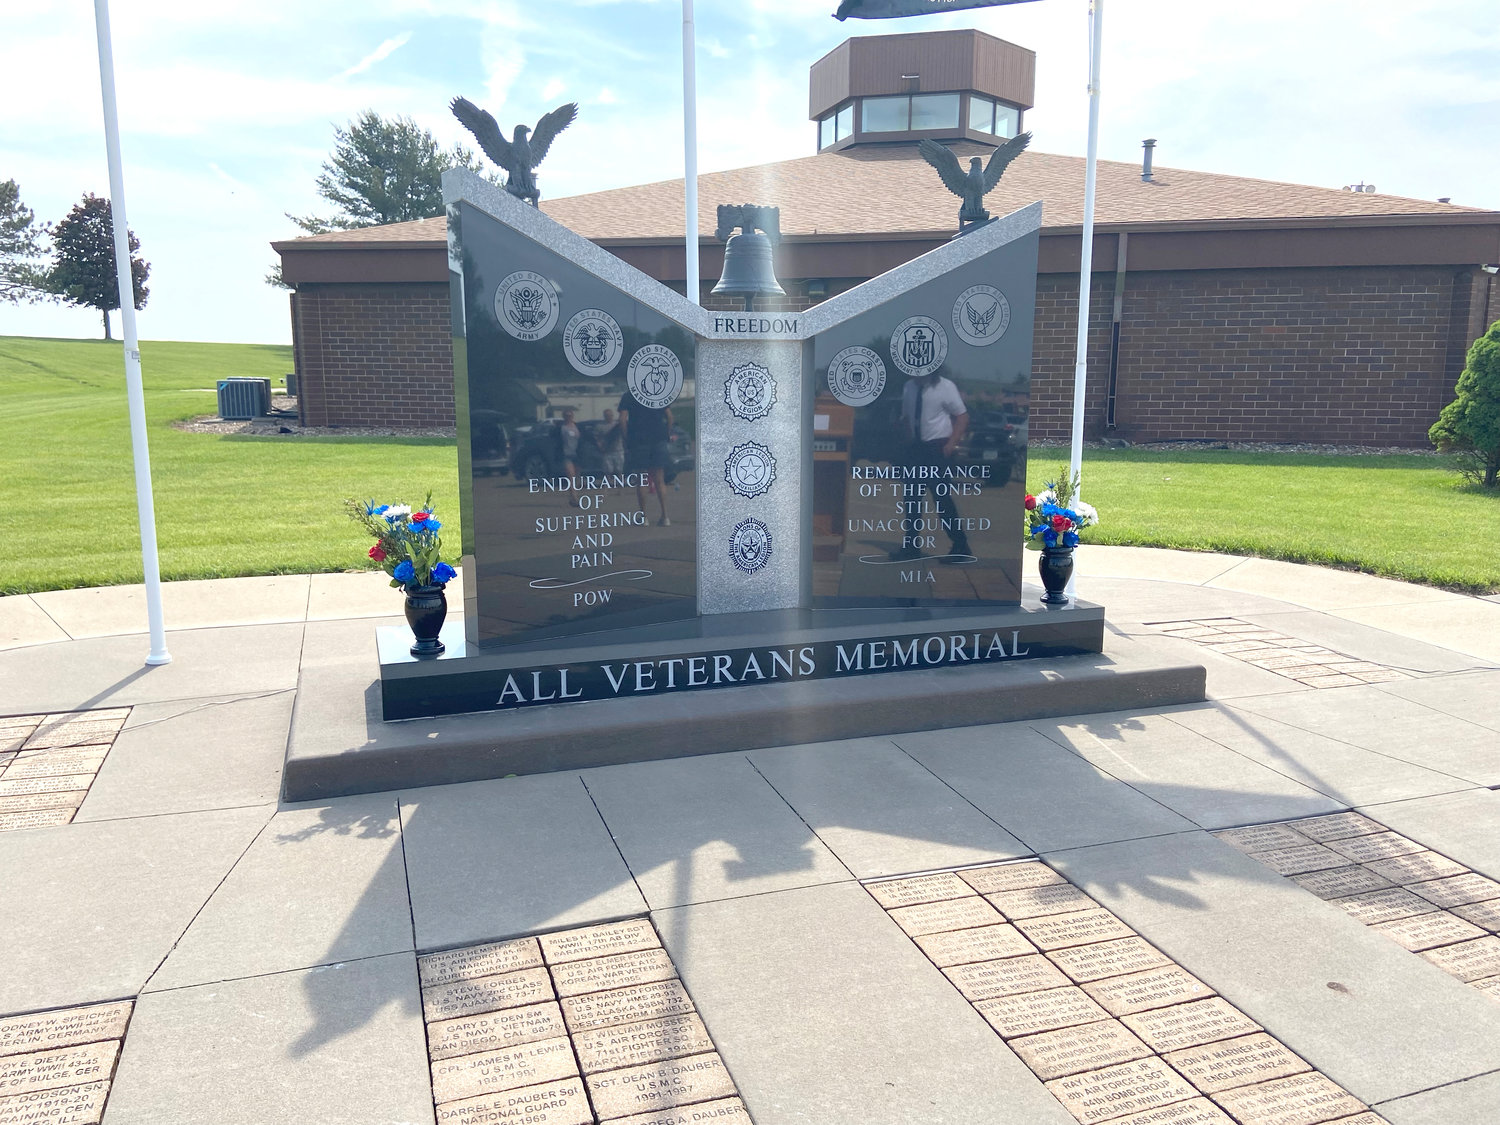 All Veterans Memorial at Lone Tree American Legion.